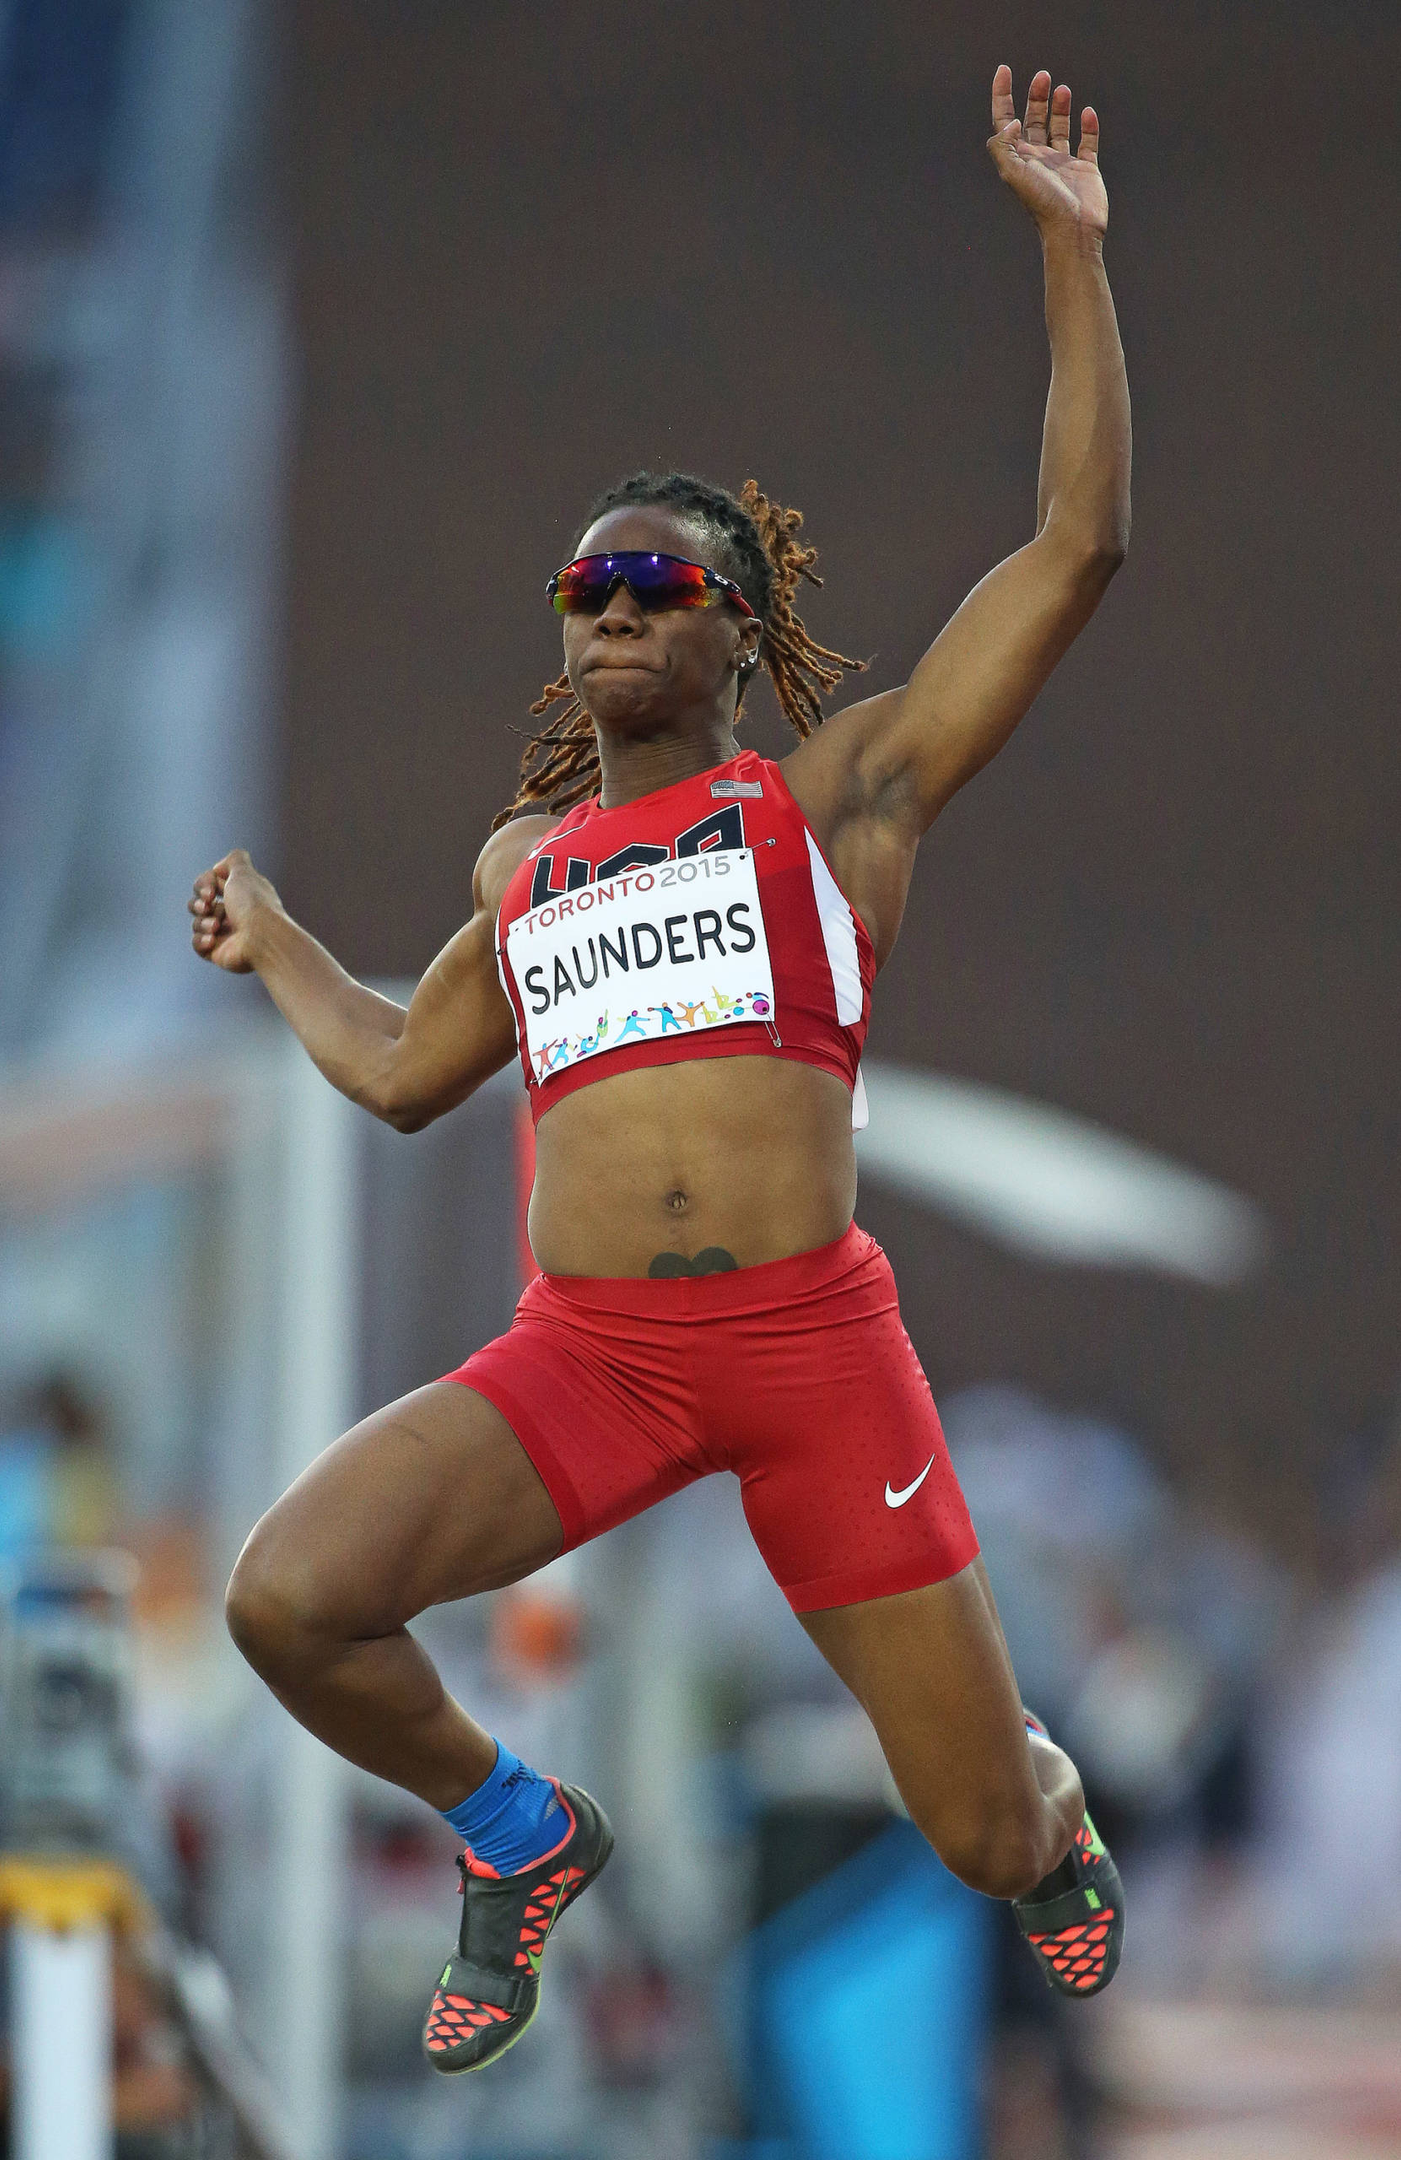 Sha'Keela Saunders Claims Pan Am Games Bronze Medal in Long Jump